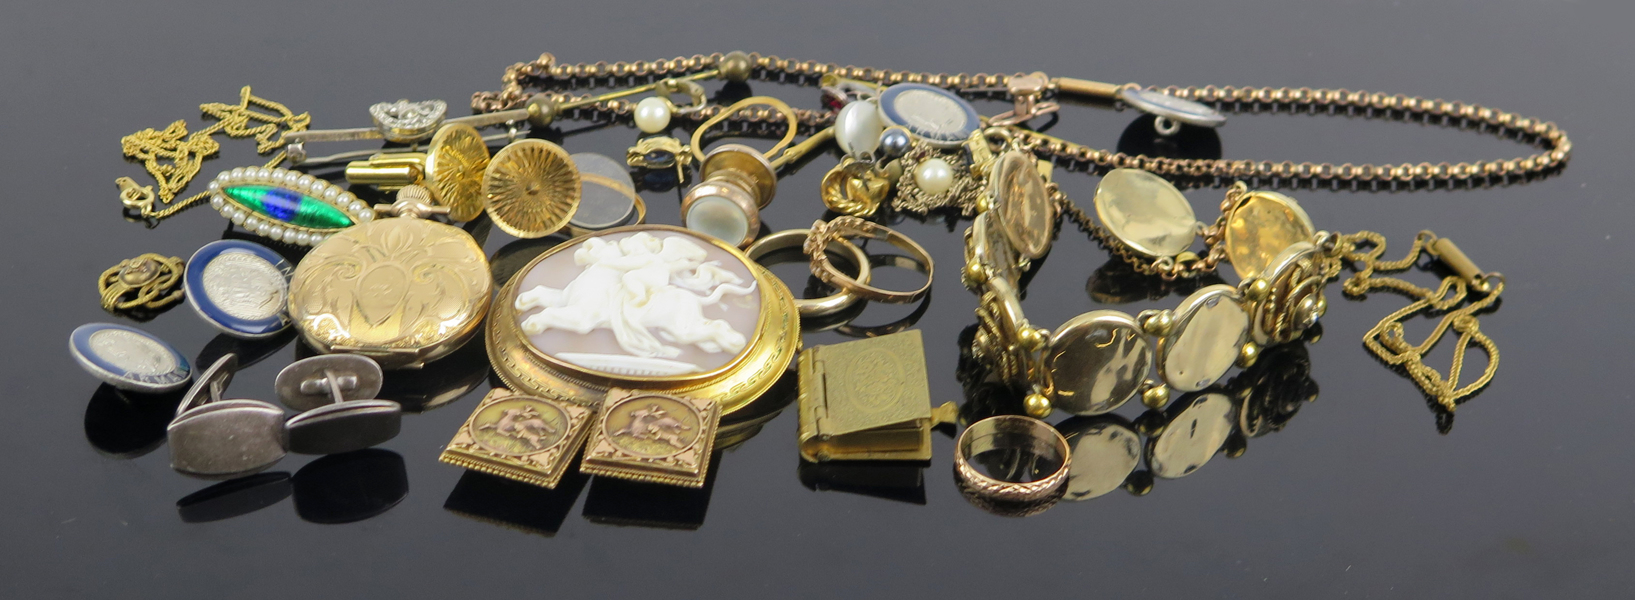 Parti smycken och bijouterier, 18-1900-tal, _24101a_8dacd66b440391c_lg.jpeg